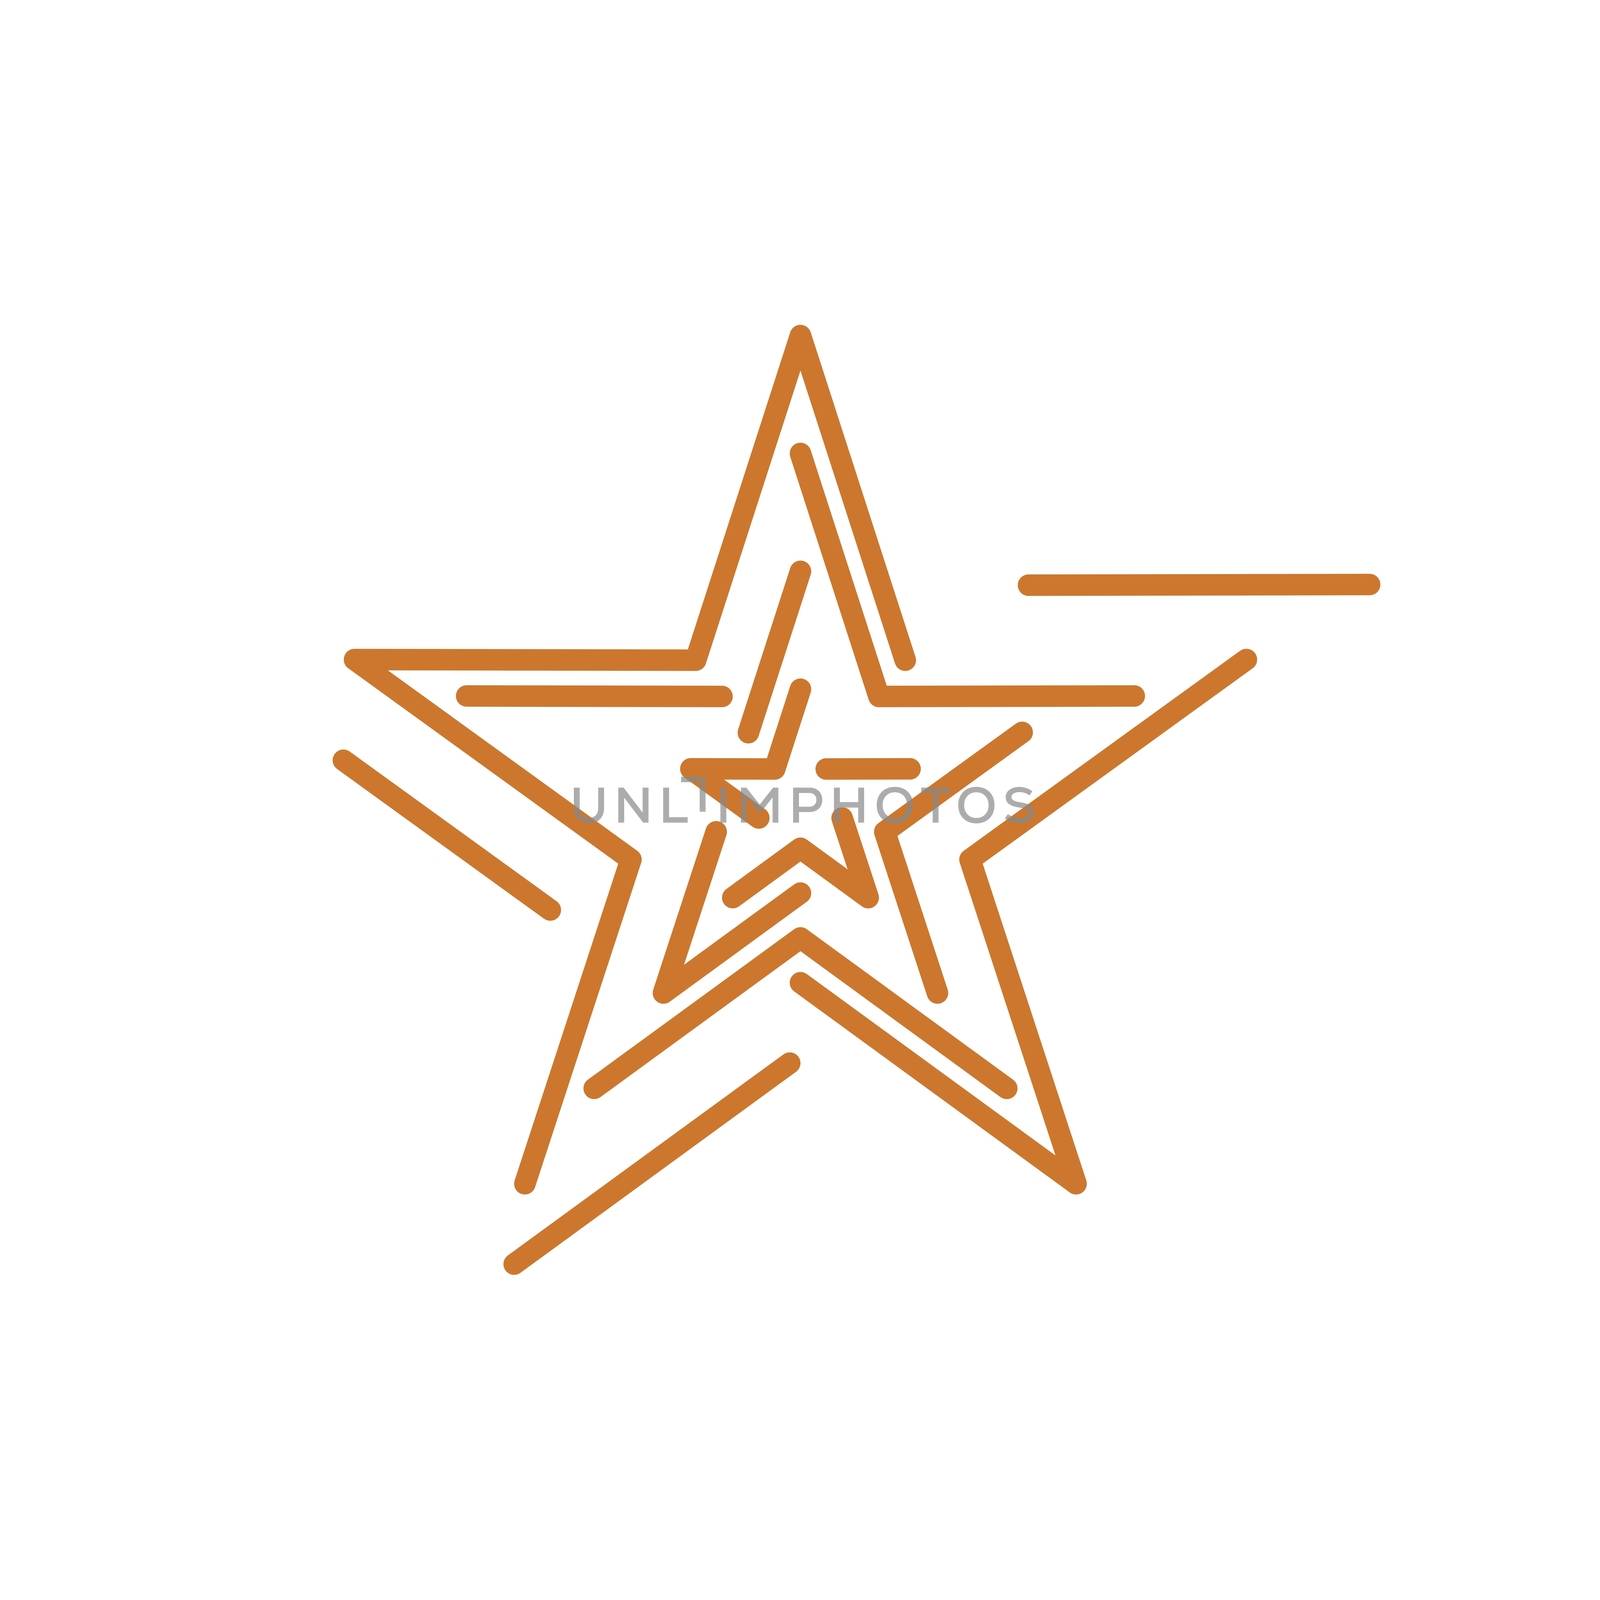 Abstract Gold Star Line Logo Template Illustration Design EPS 10